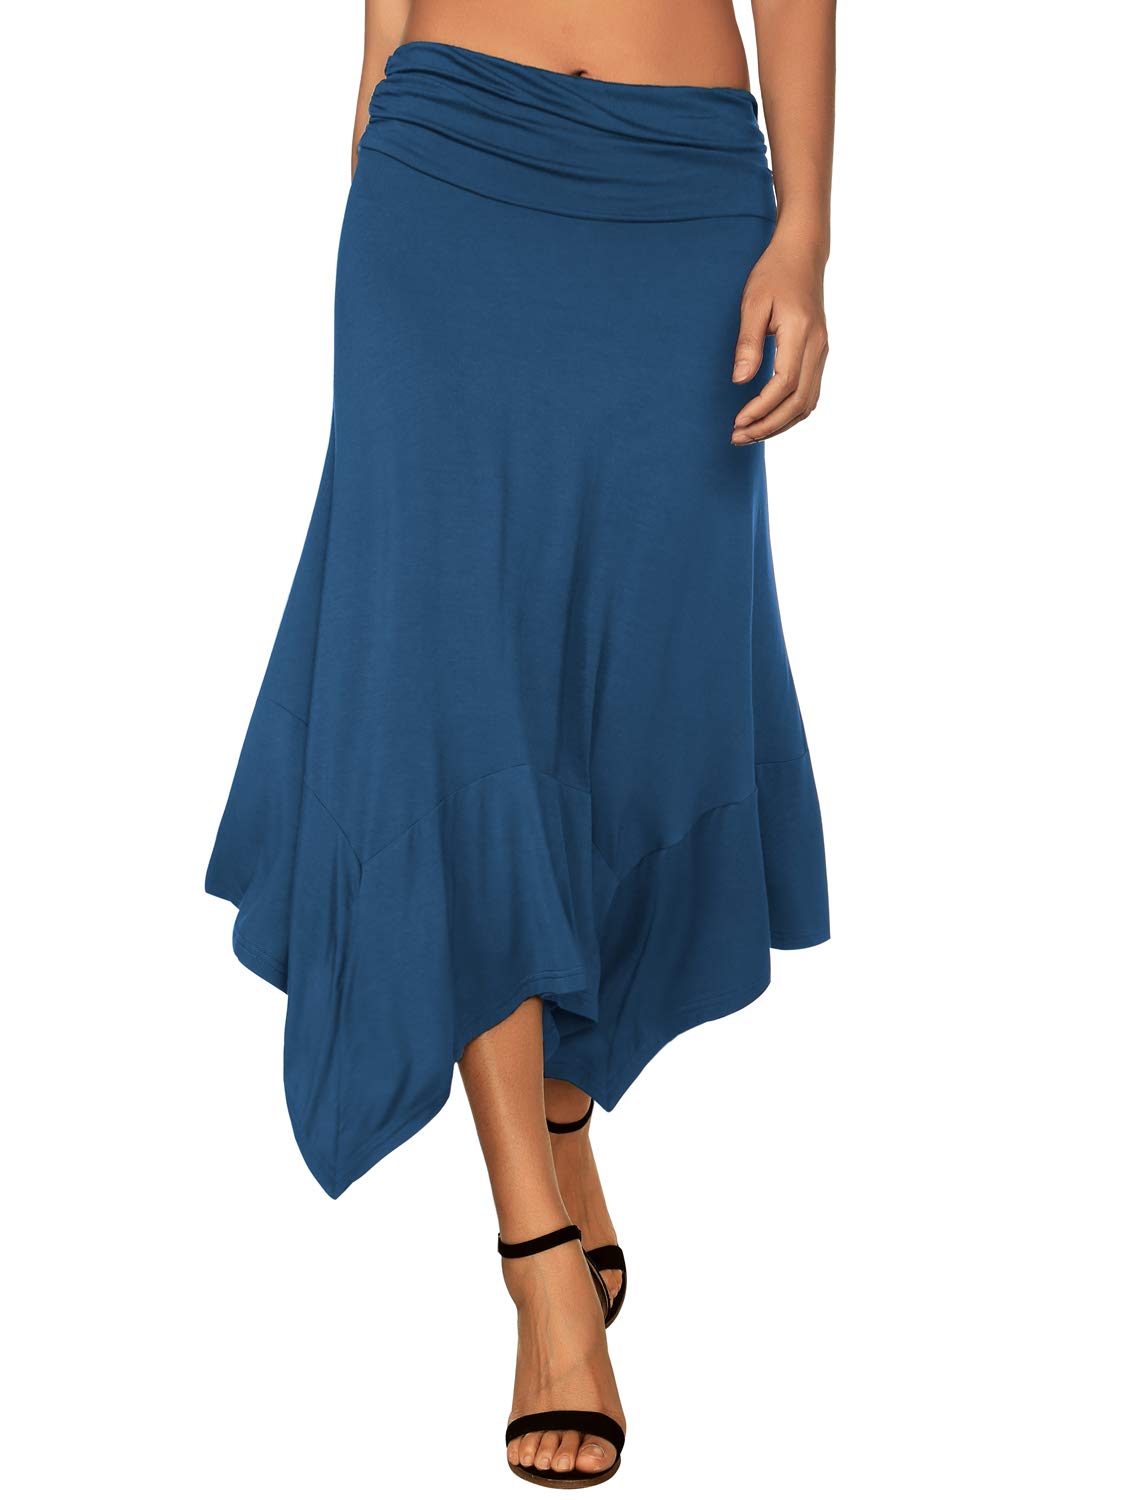 DJT Women's Blue Flowy Handkerchief Hemline Midi Skirt